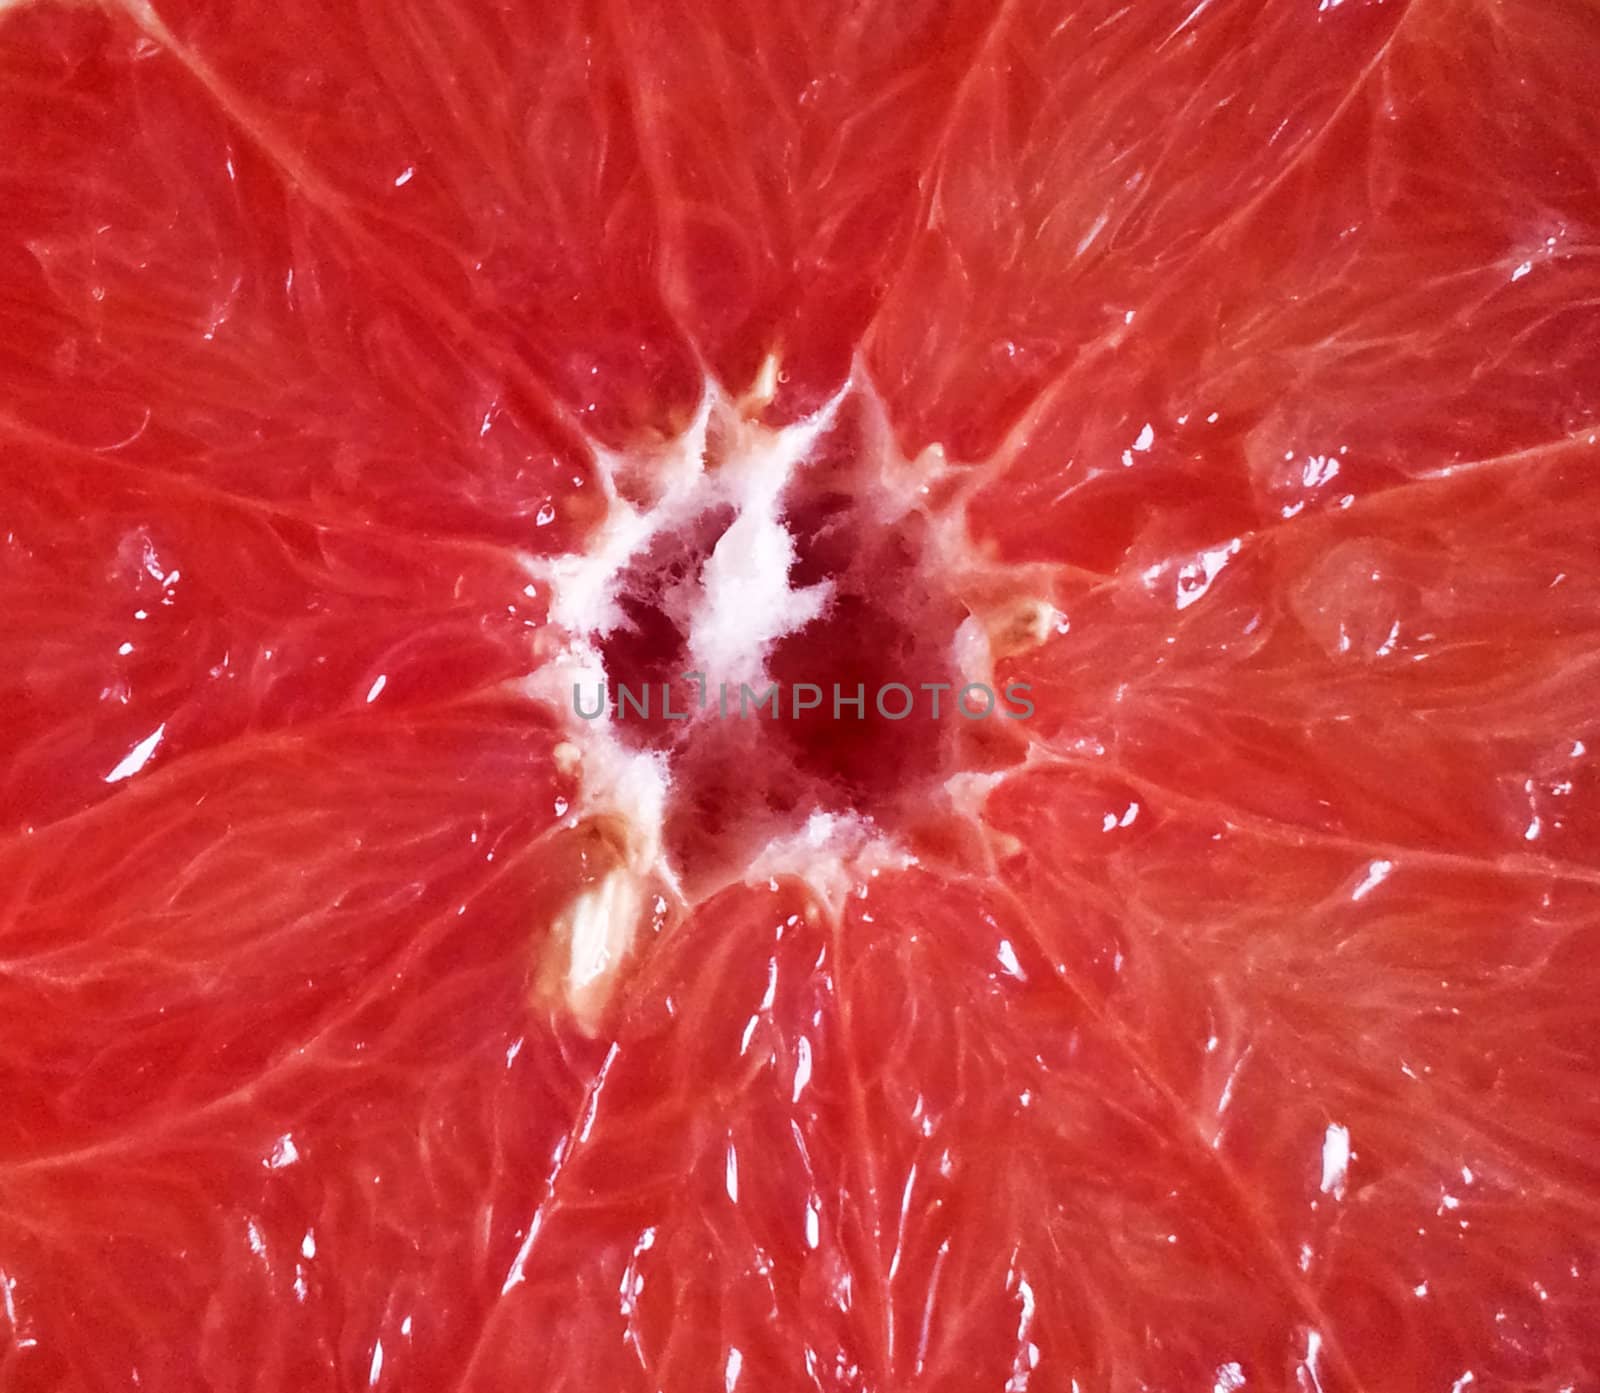 Grapefruit close-up by MalyDesigner